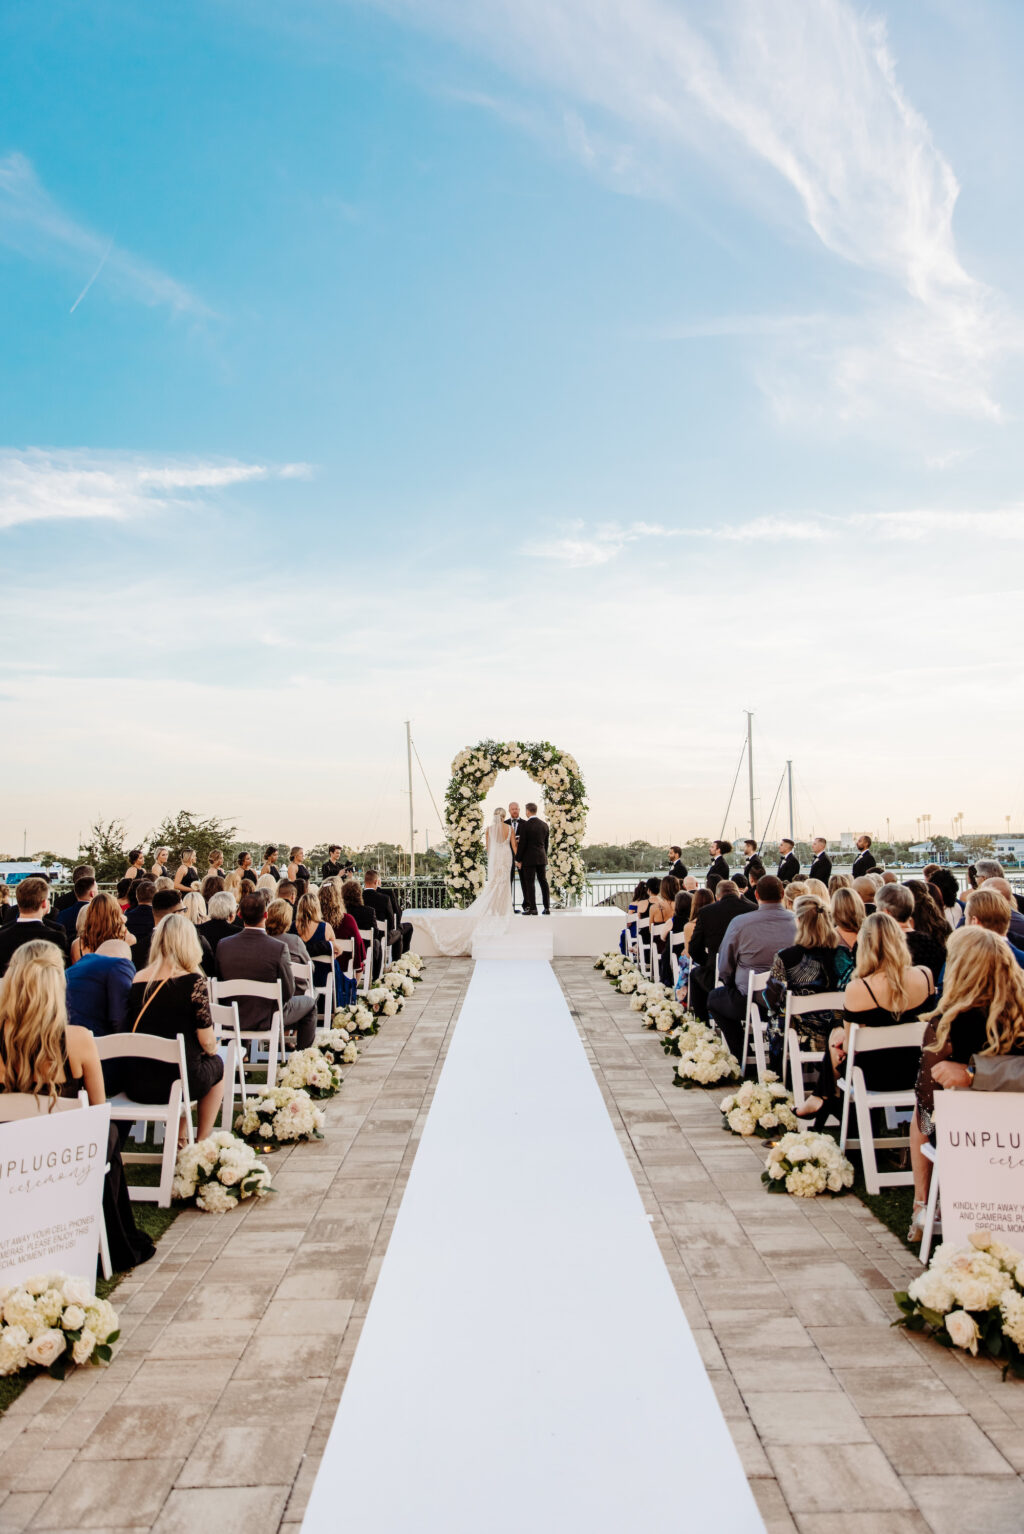 White Aisle Runner with Petite Rose and Hydrangea Flower Arrangement Decor Ideas | Outdoor Wedding Ceremony | Downtown St. Pete Venue Renaissance Vinoy